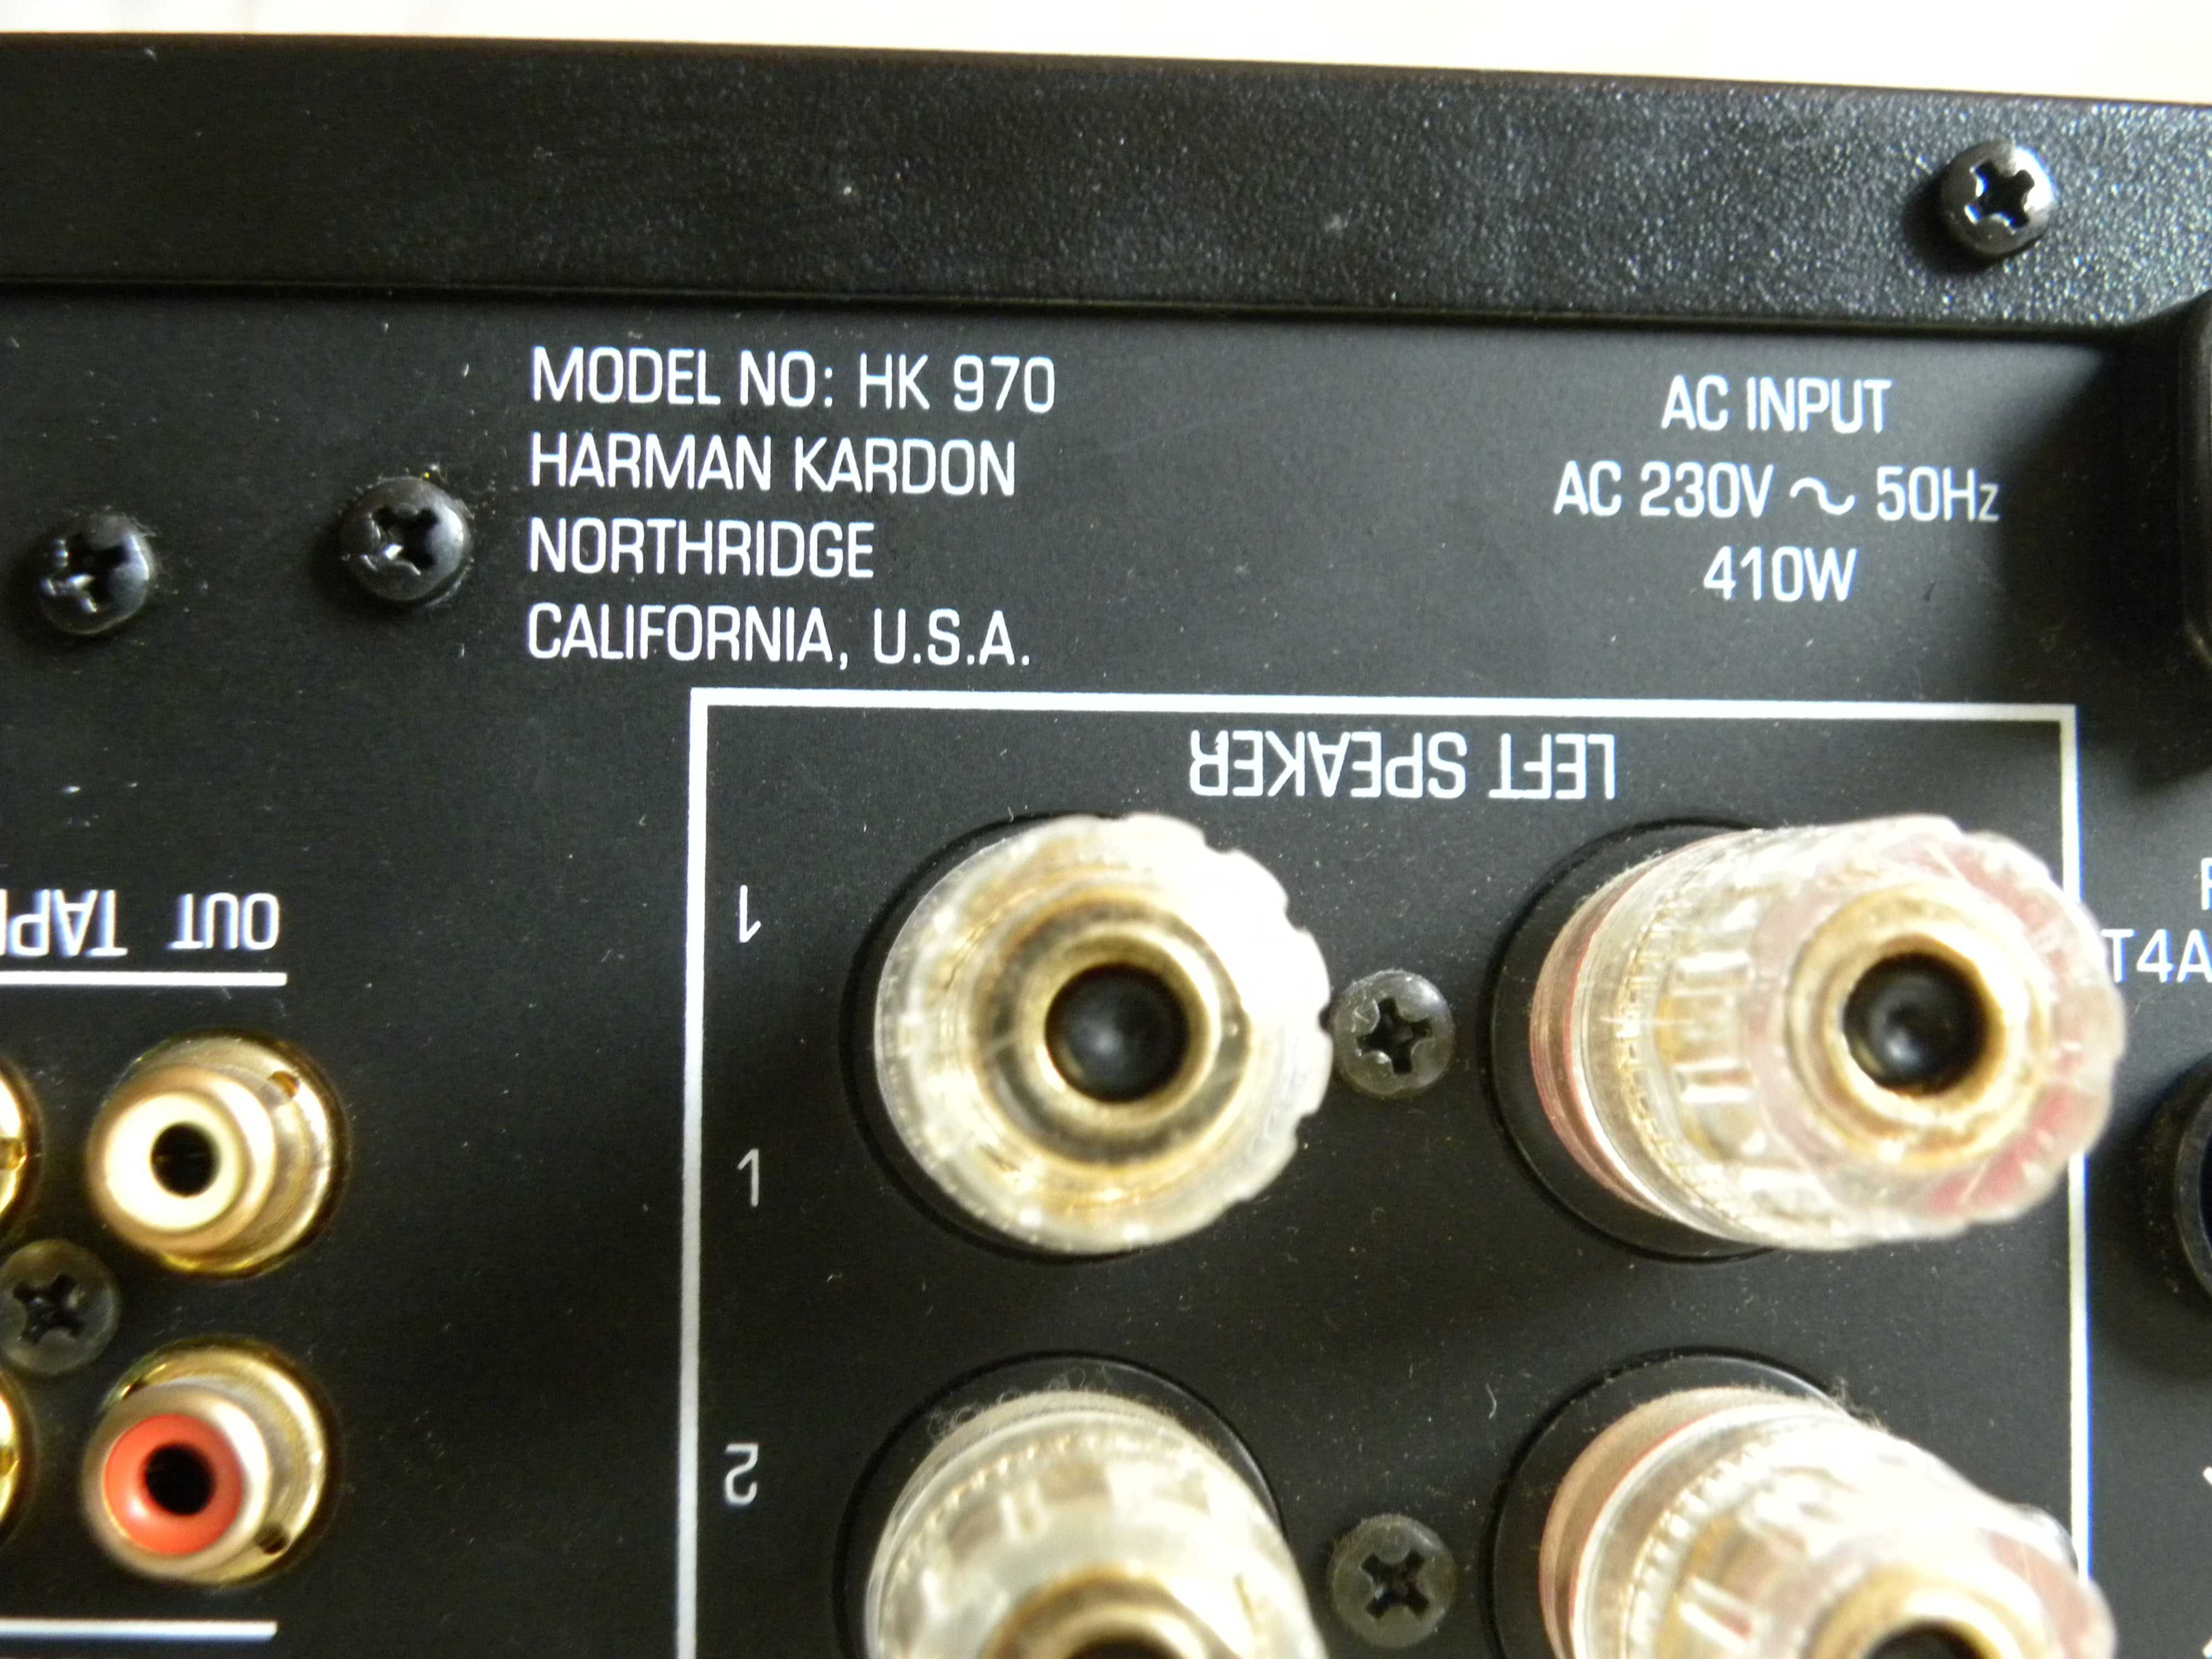 Stereo Integrated Amplifier Hi-Fi Harman Kardon HK970 (2005)